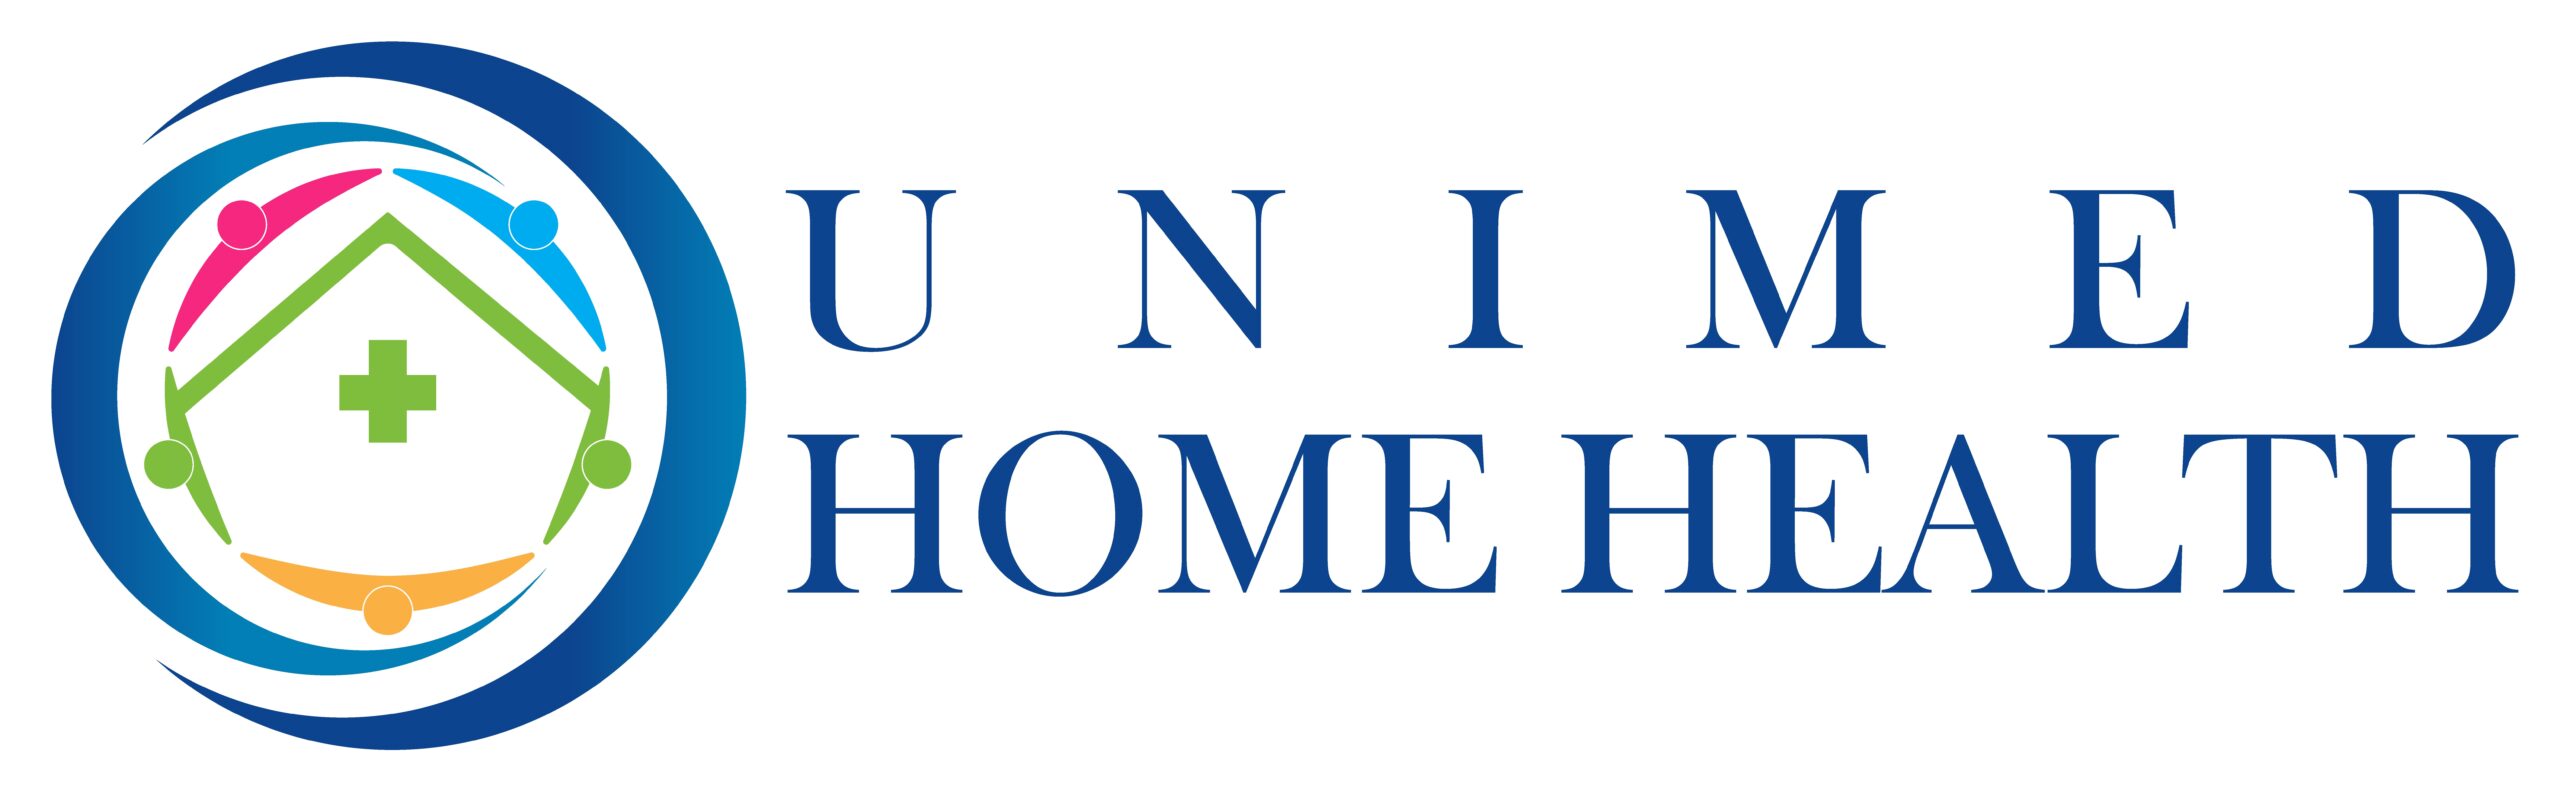 Unimed - Logo - Copy